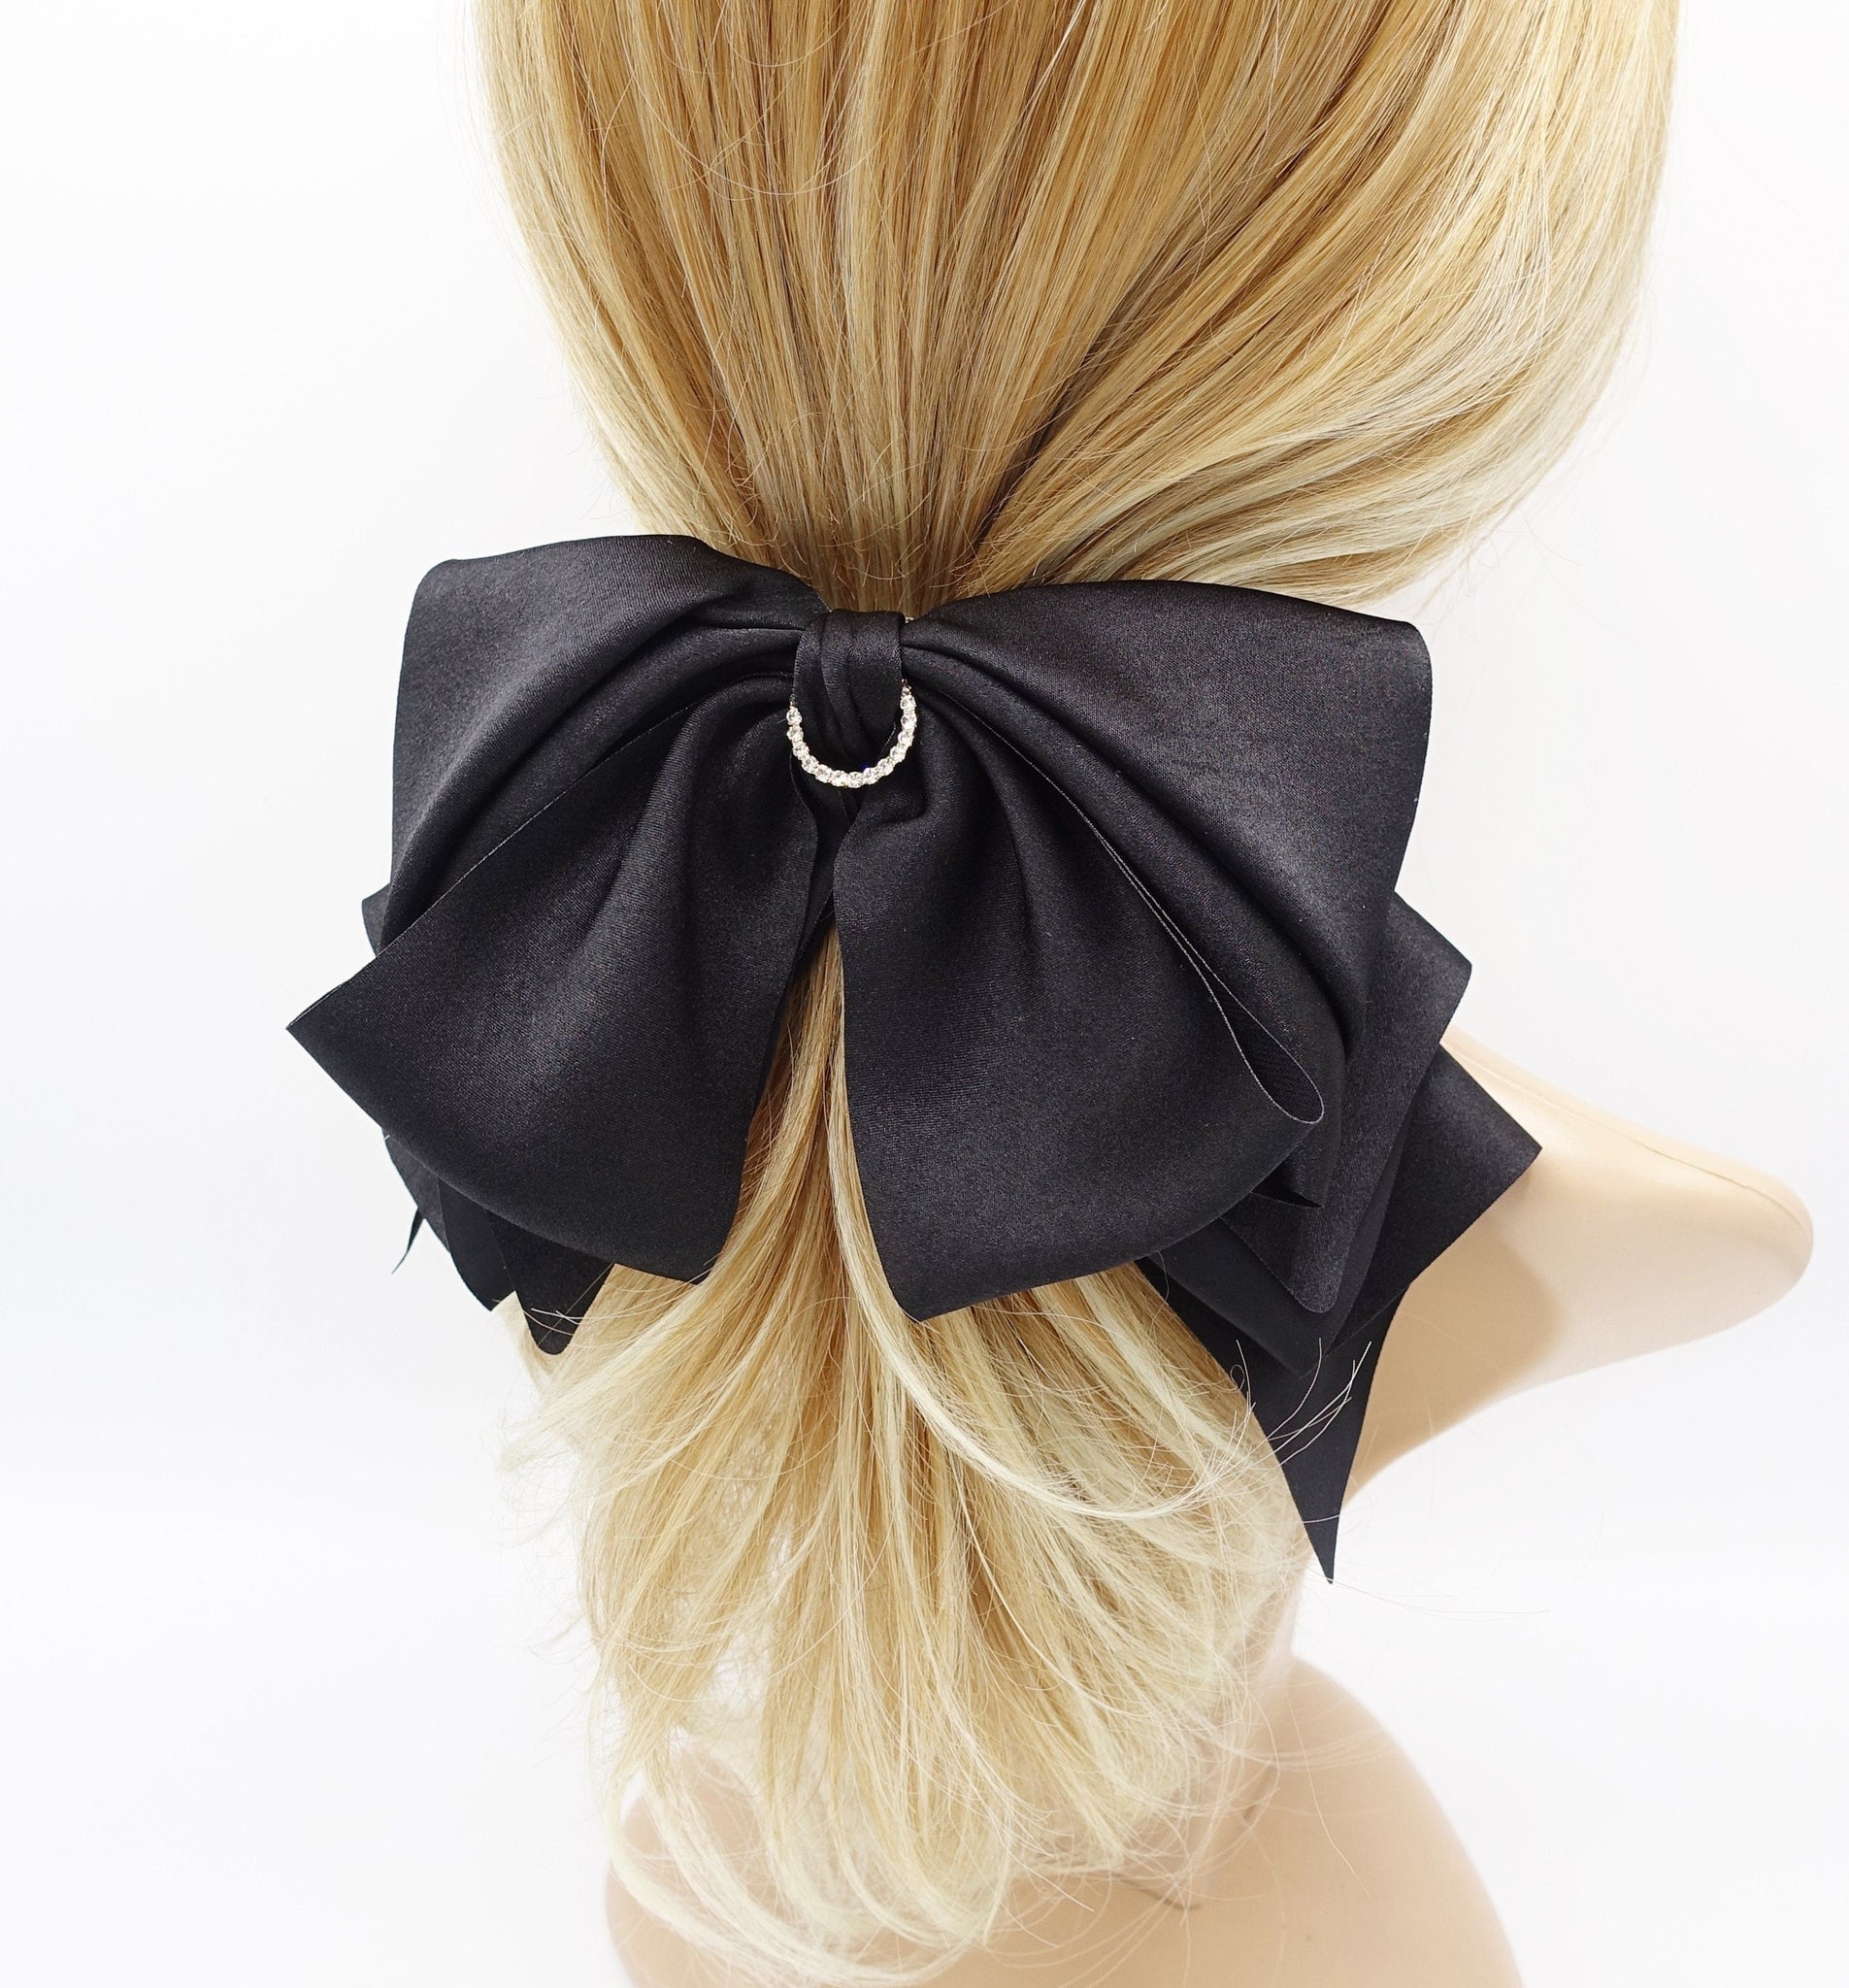 veryshine.com Barrette (Bow) satin hair bow, layered hair bow, rhinestone hair bow for women